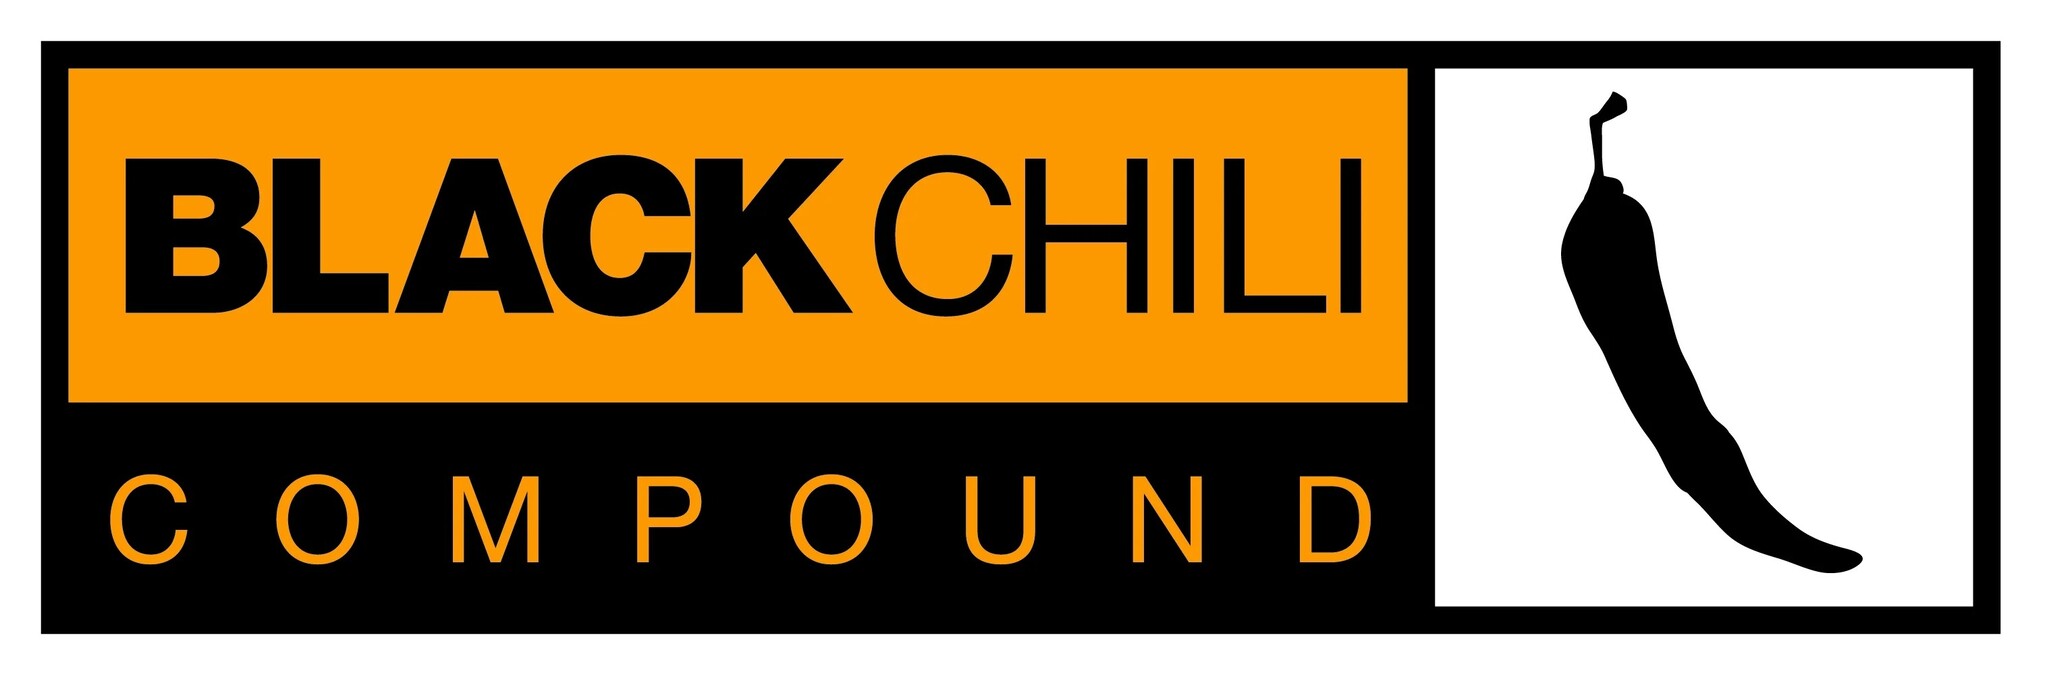 Black Chili Compound logo